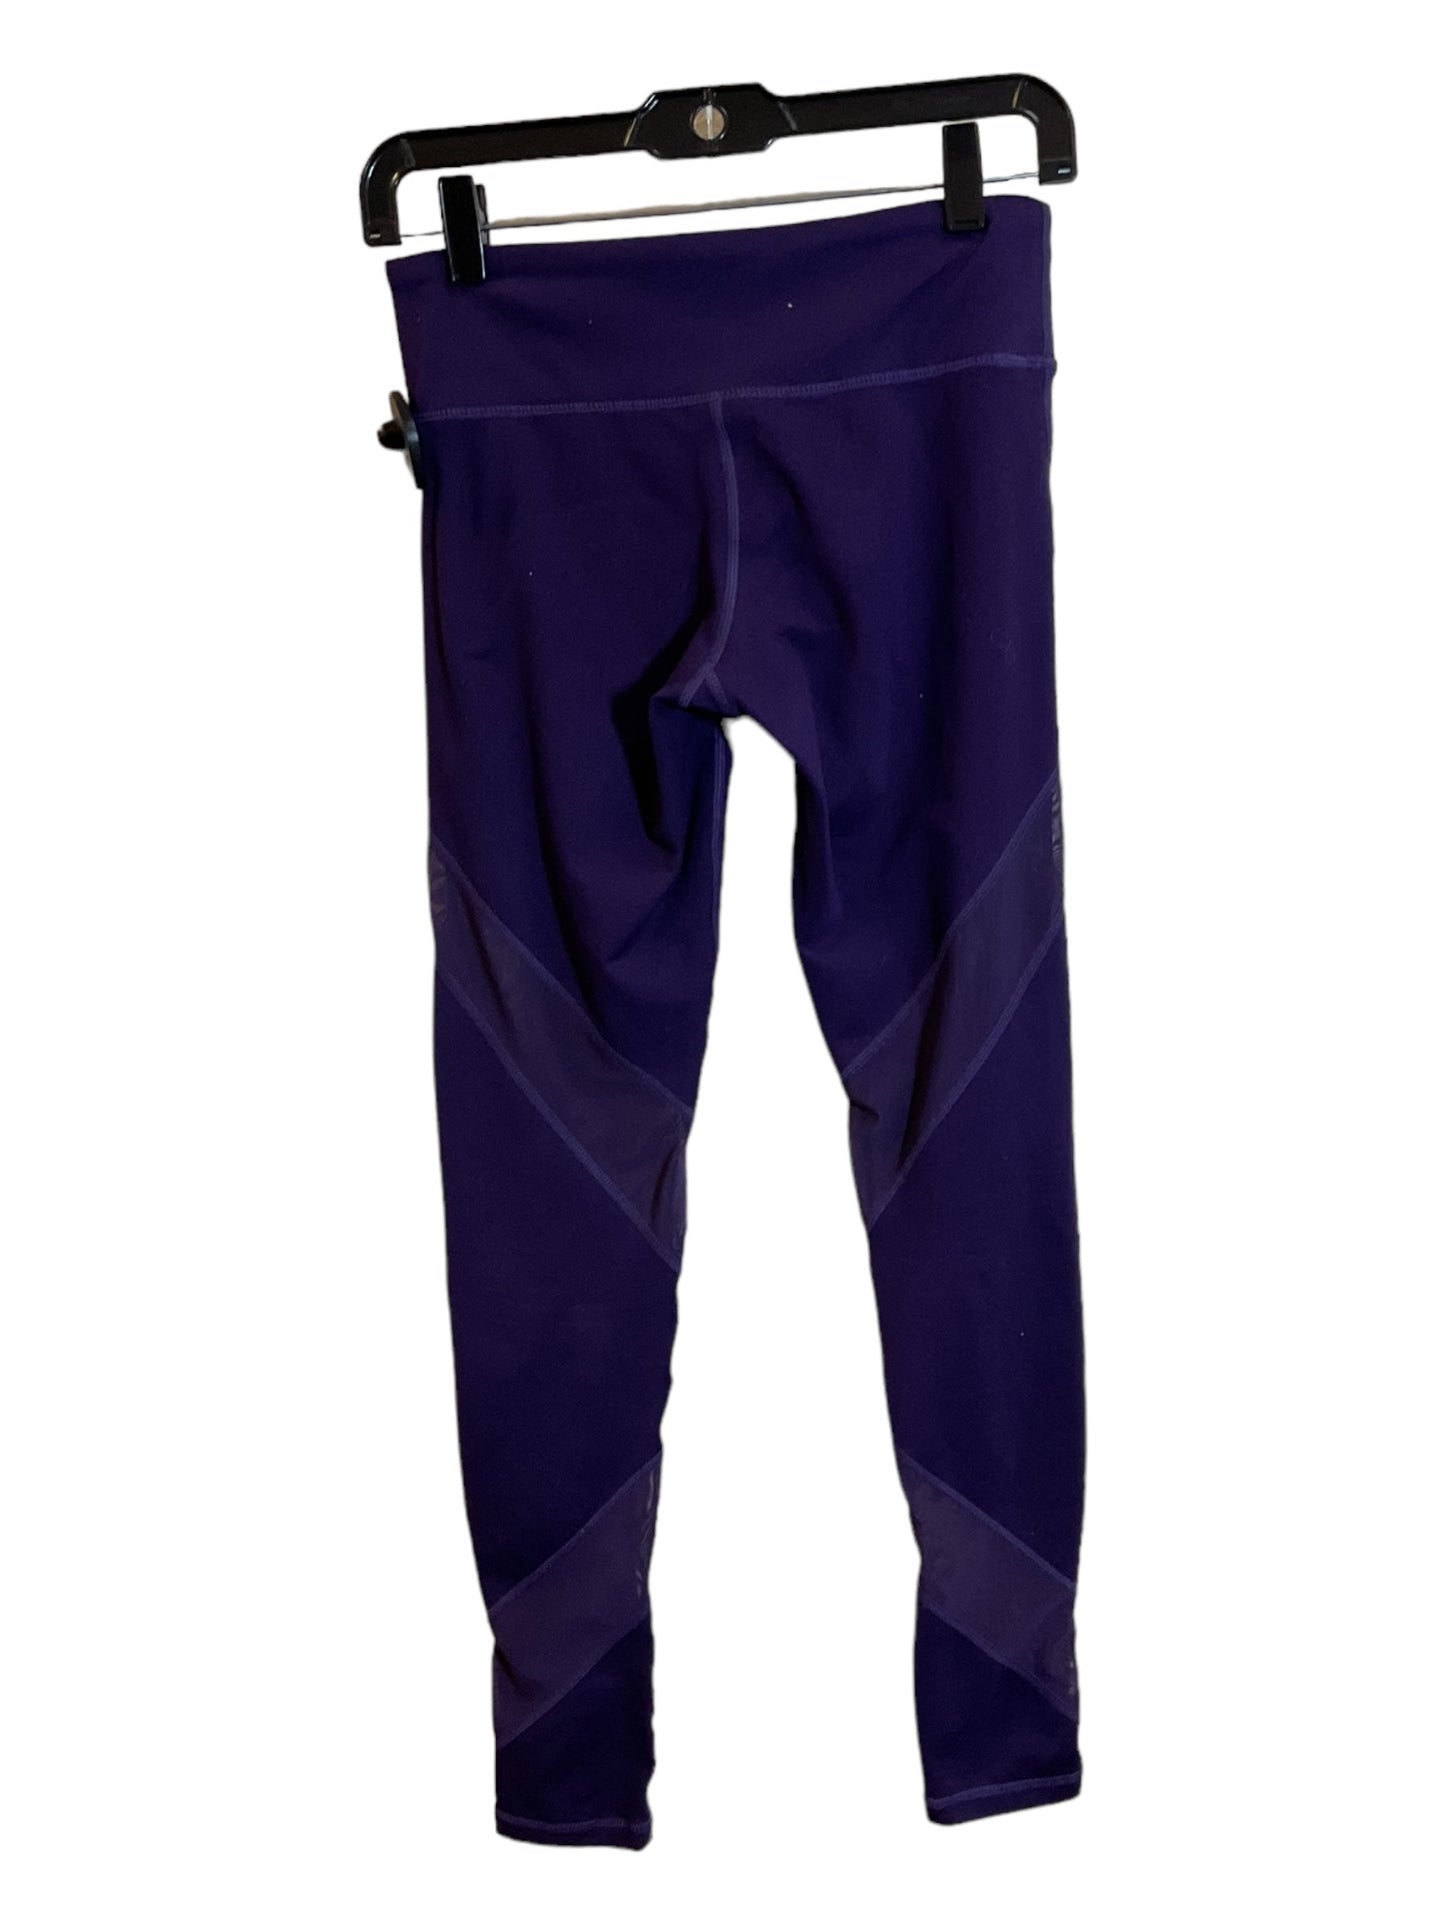 Purple Athletic Leggings Mono B, Size S